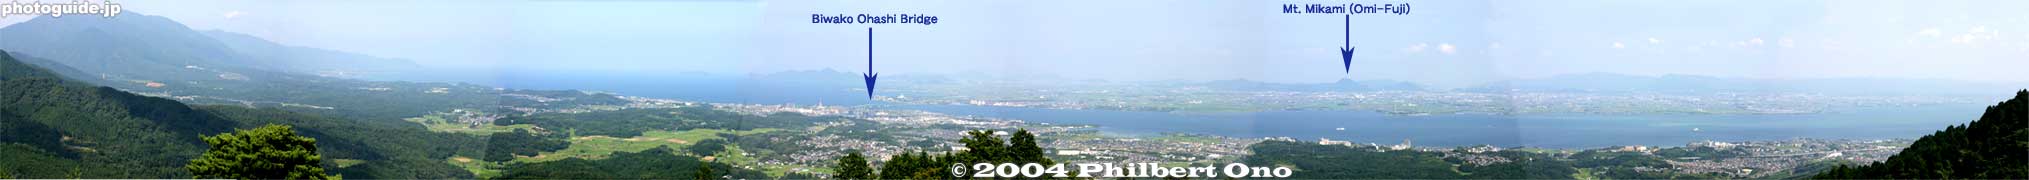 Panoramic view of Lake Biwa from Mt. Hiei.
Keywords: shiga otsu mt. hie-zan driveway biwako lake biwa biwakobest